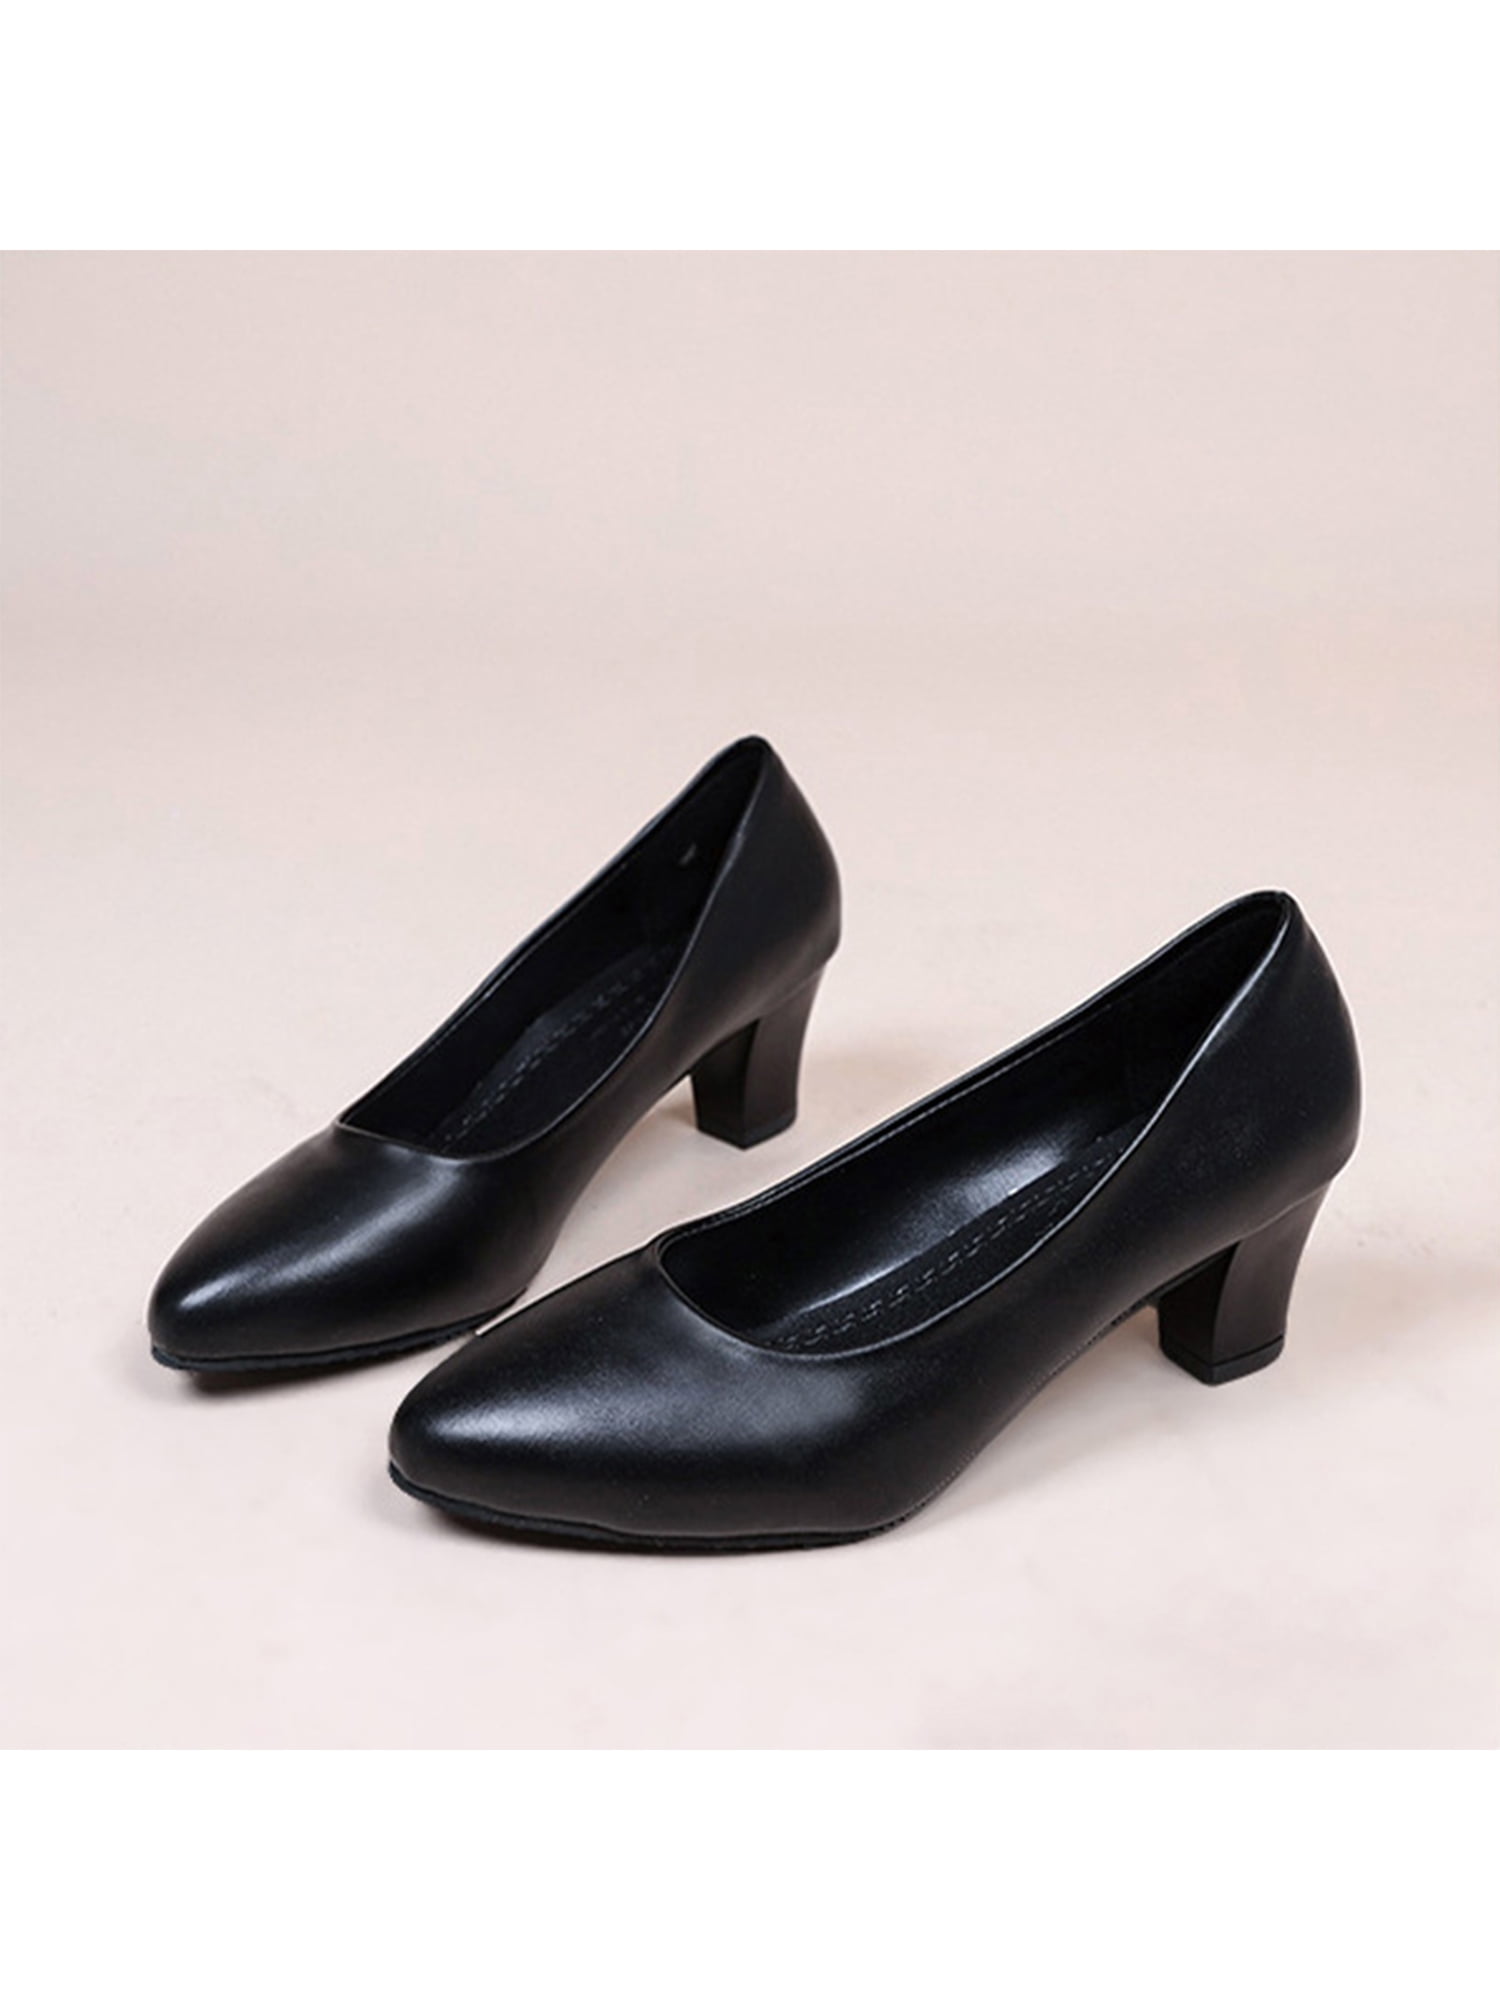 Heels | High, Platform and Chunky Heels for Women | ASOS